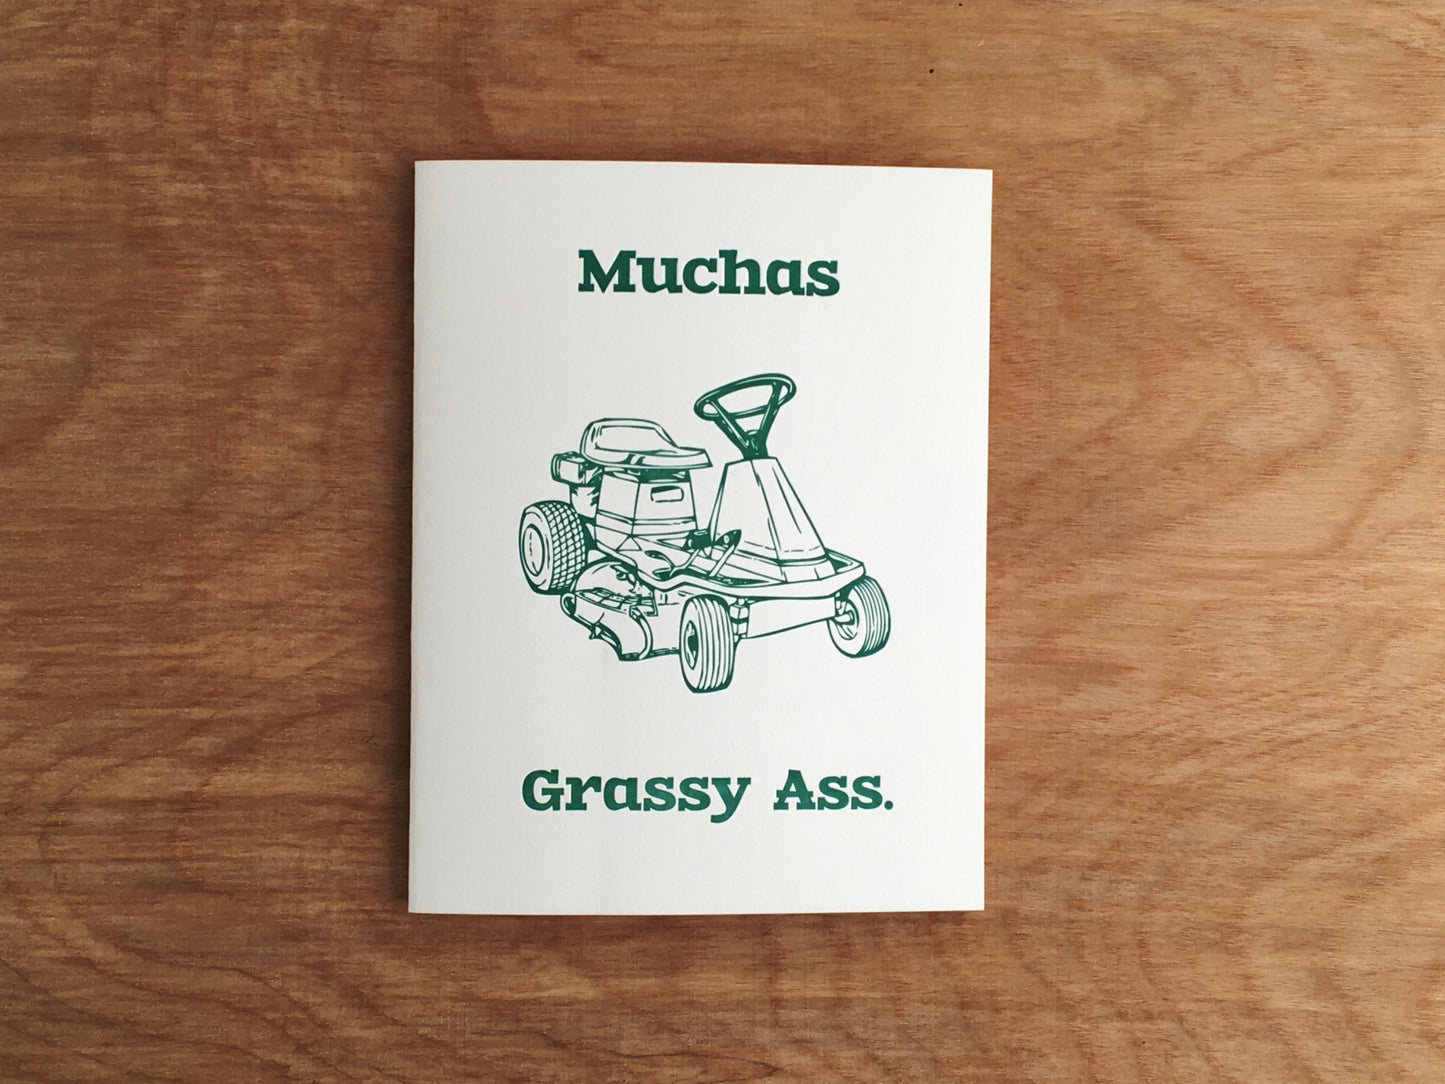 Muchas Grassy Ass